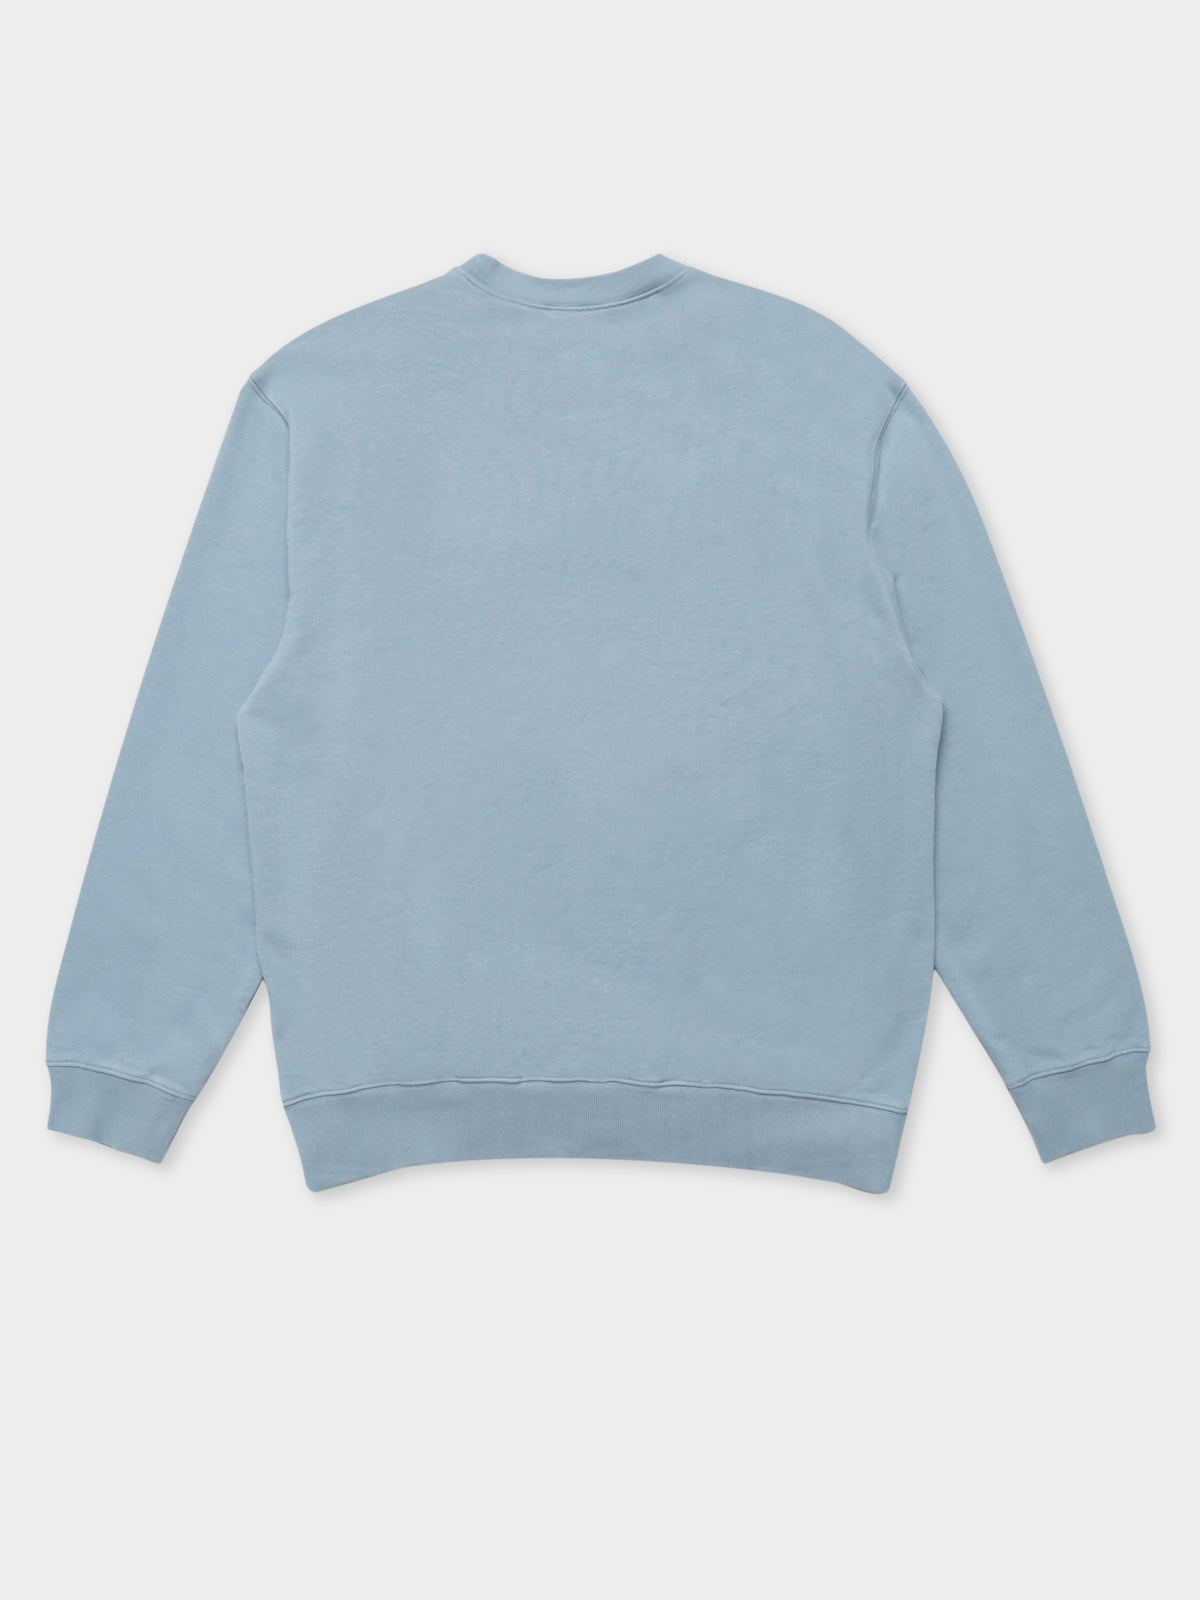 Pocket Sweatshirt in Frosted Blue